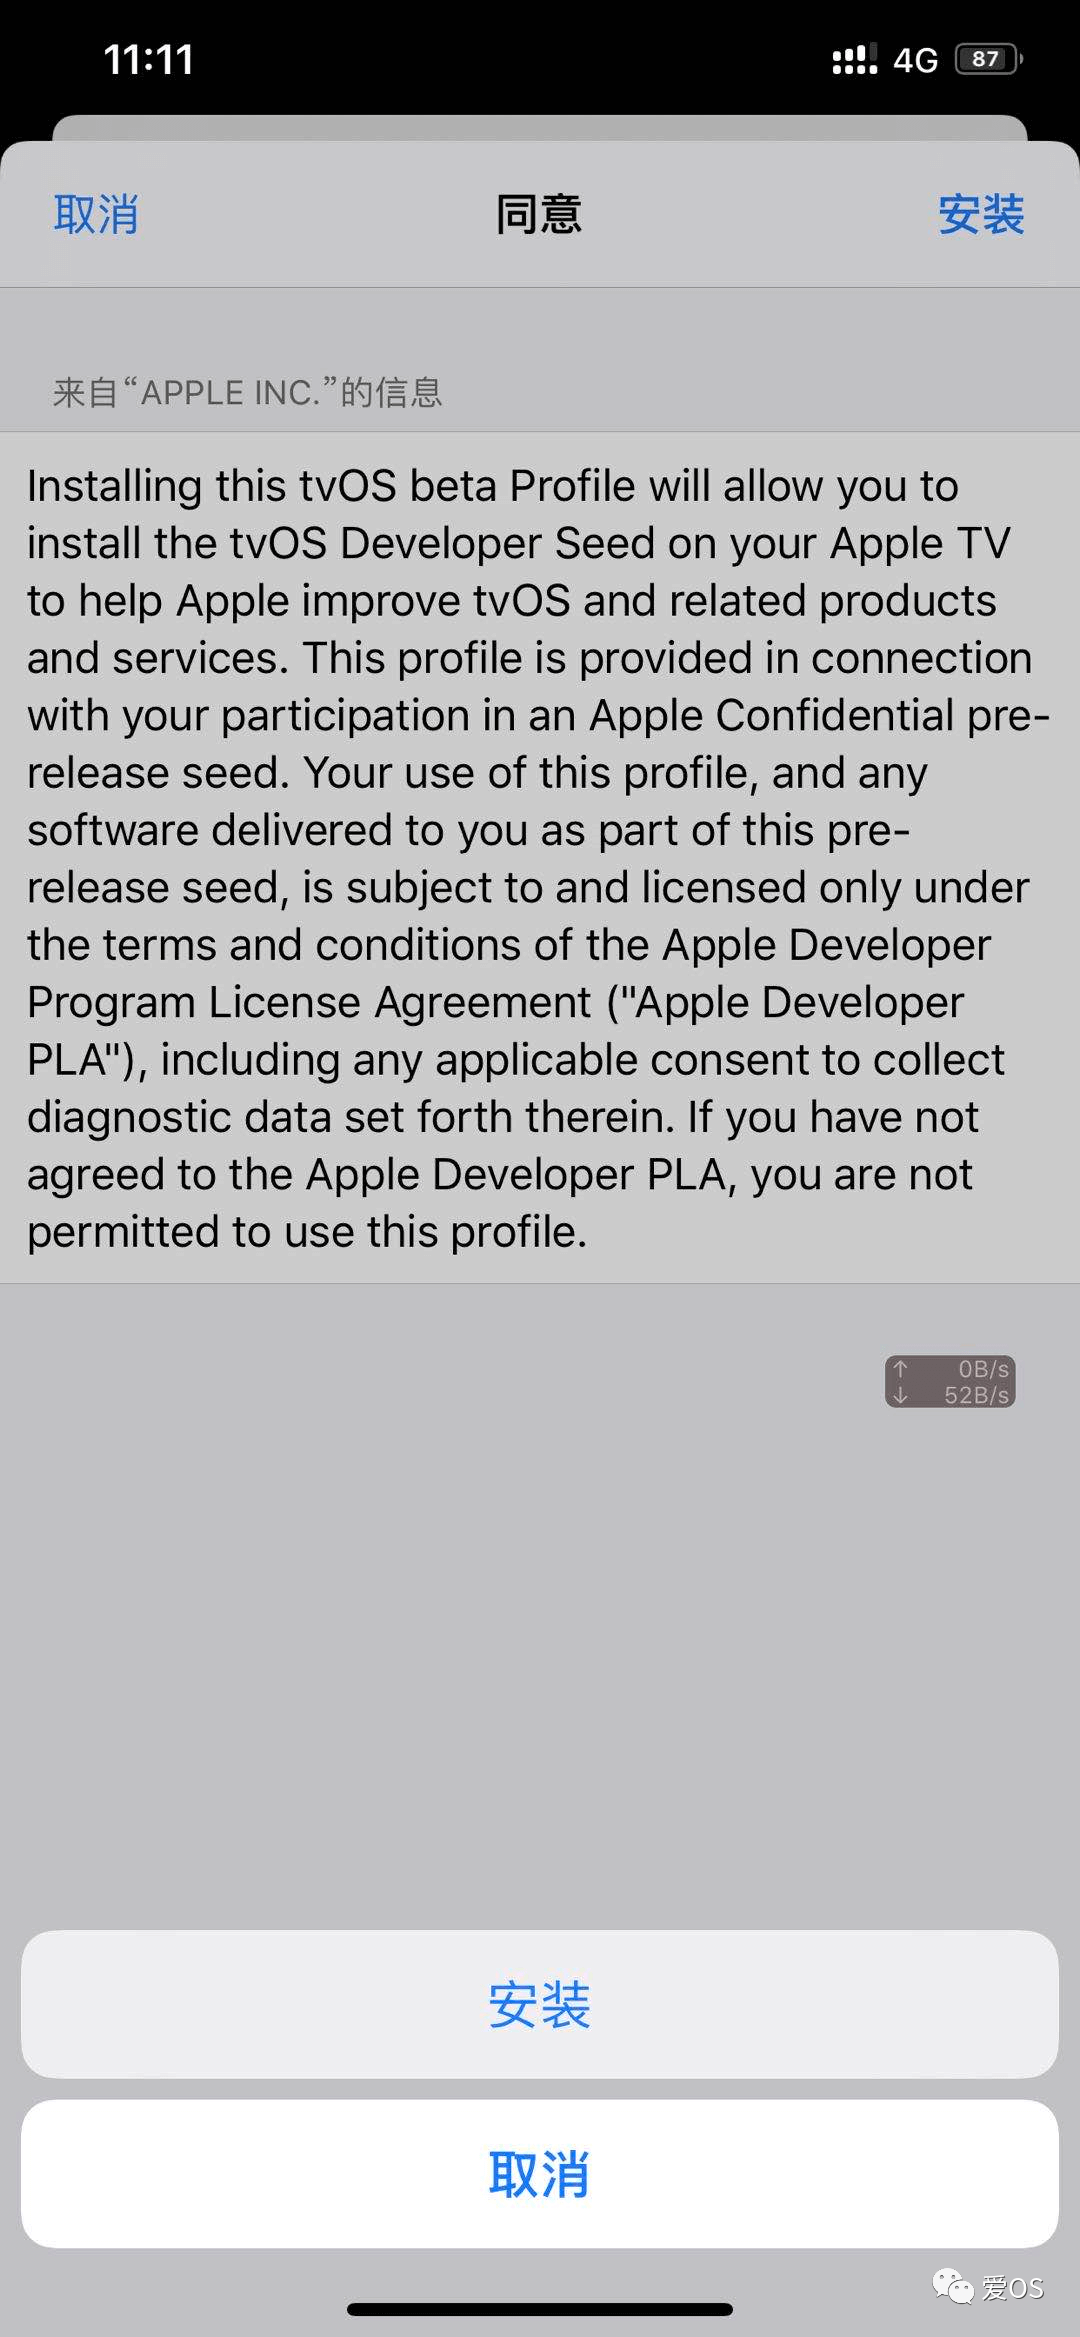 iOS13屏蔽更新描述文件-APP喵-阿喵软件分享